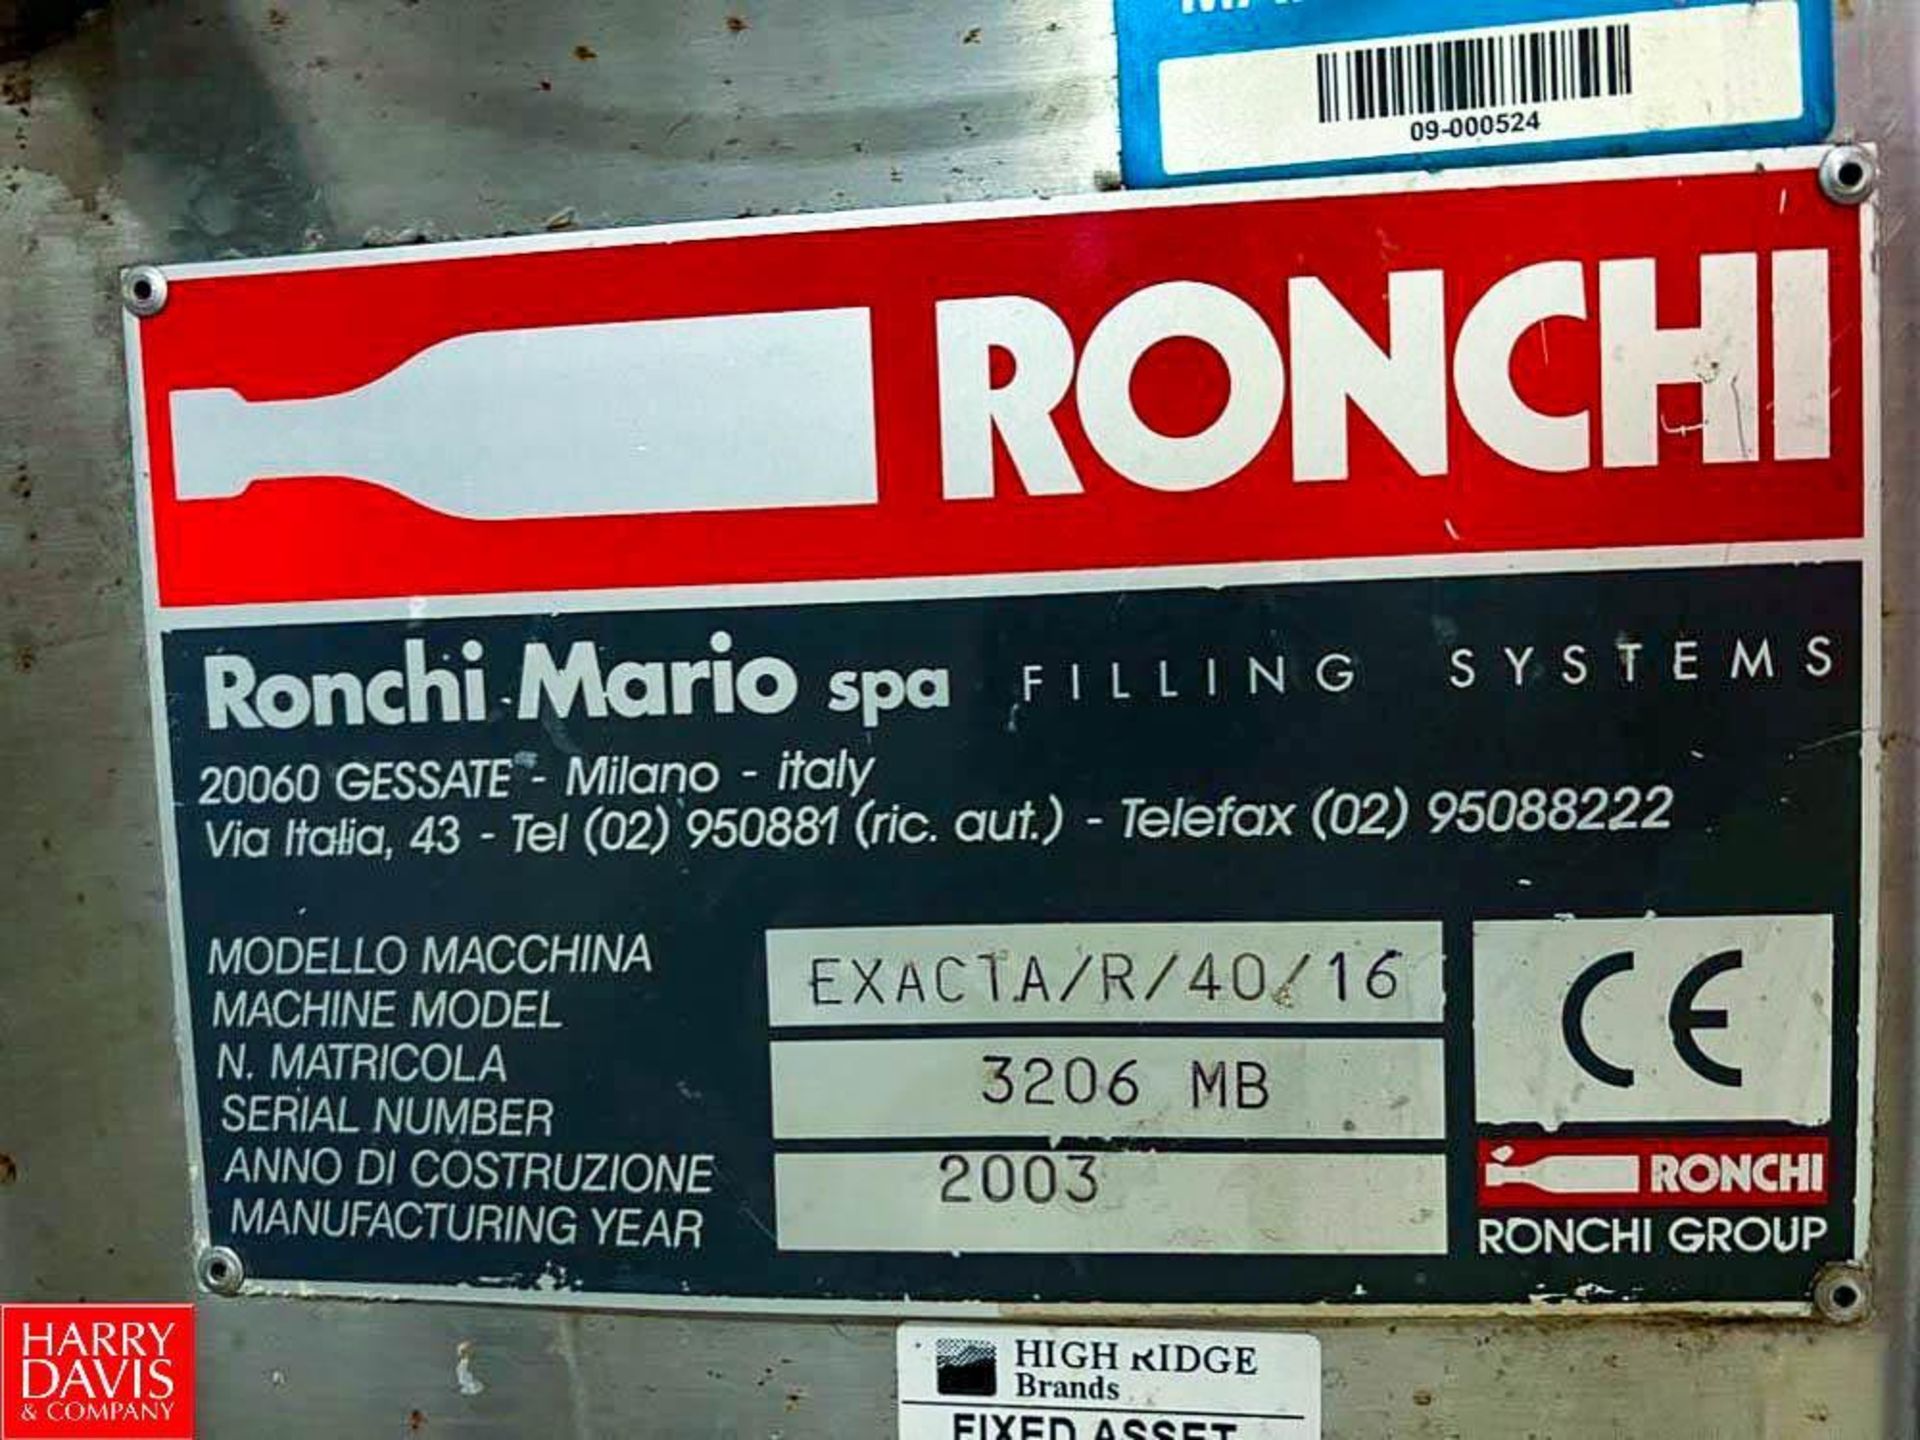 Ronchi 40-Valve Filler/16-Valve Capper, Model: Exacta/R/40/16, S/N: 3206/MB with T Group Cap Feeder, - Image 4 of 7